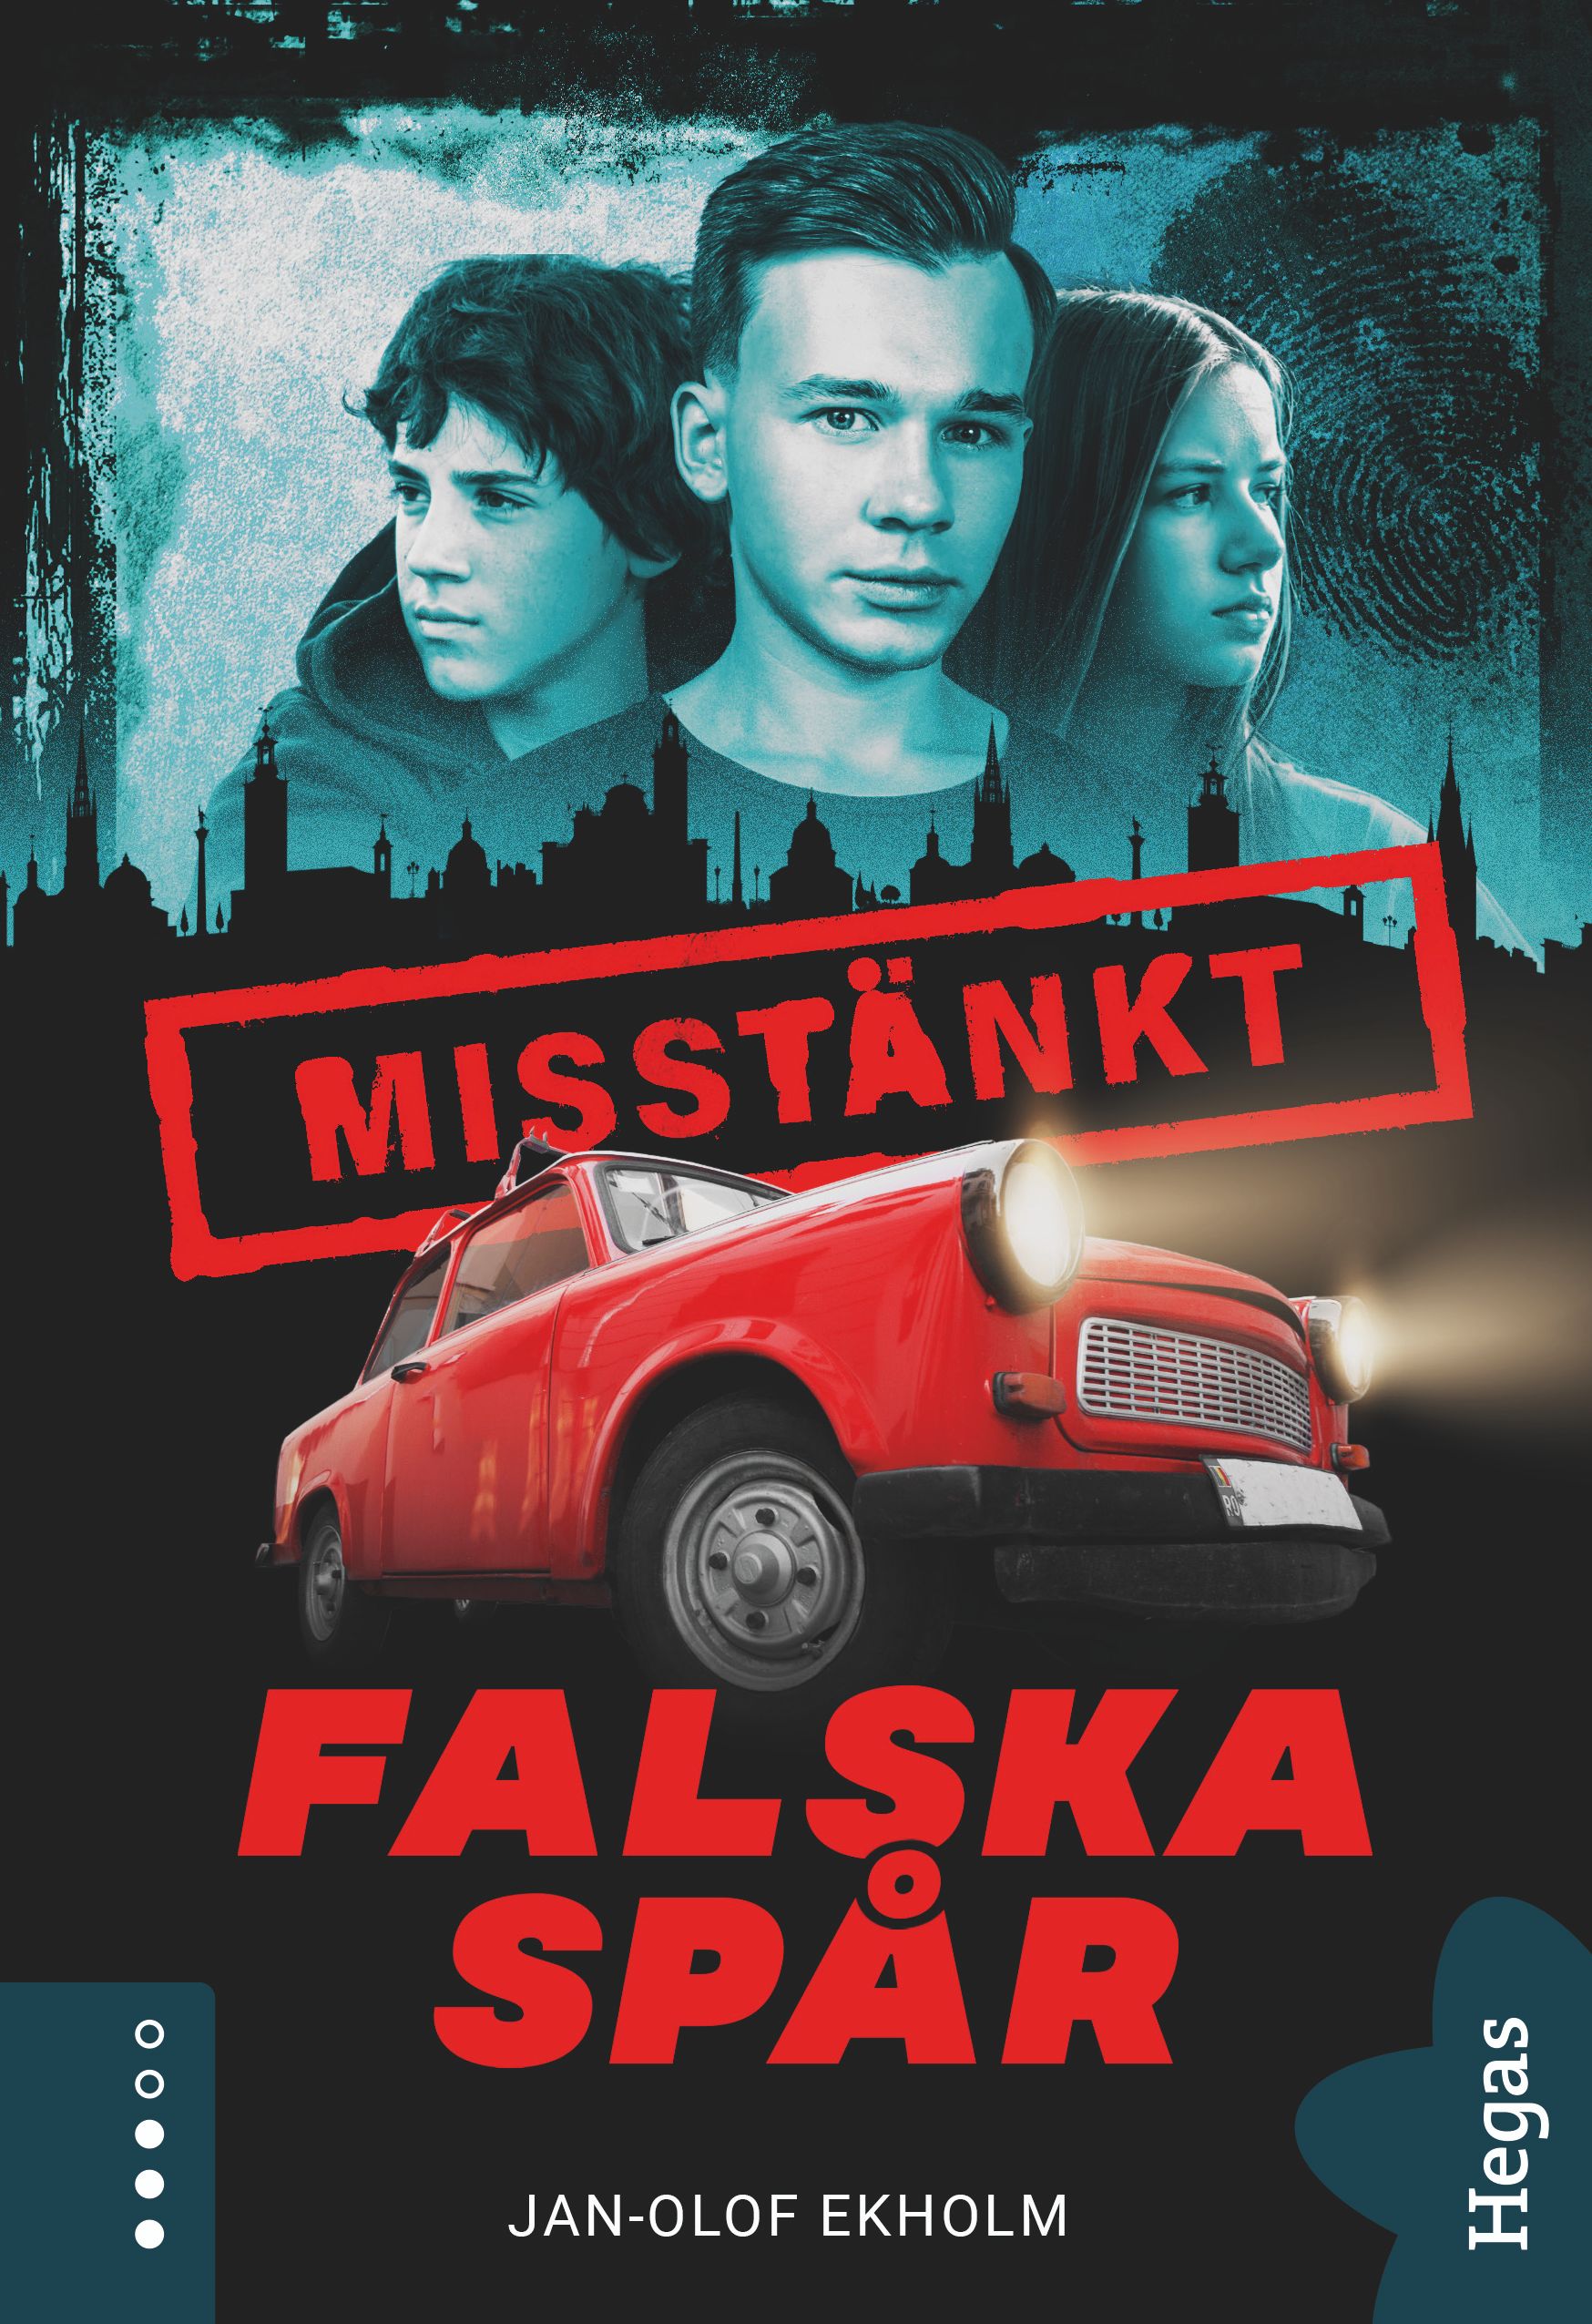 Falska spår, eBook by Jan-Olof Ekholm